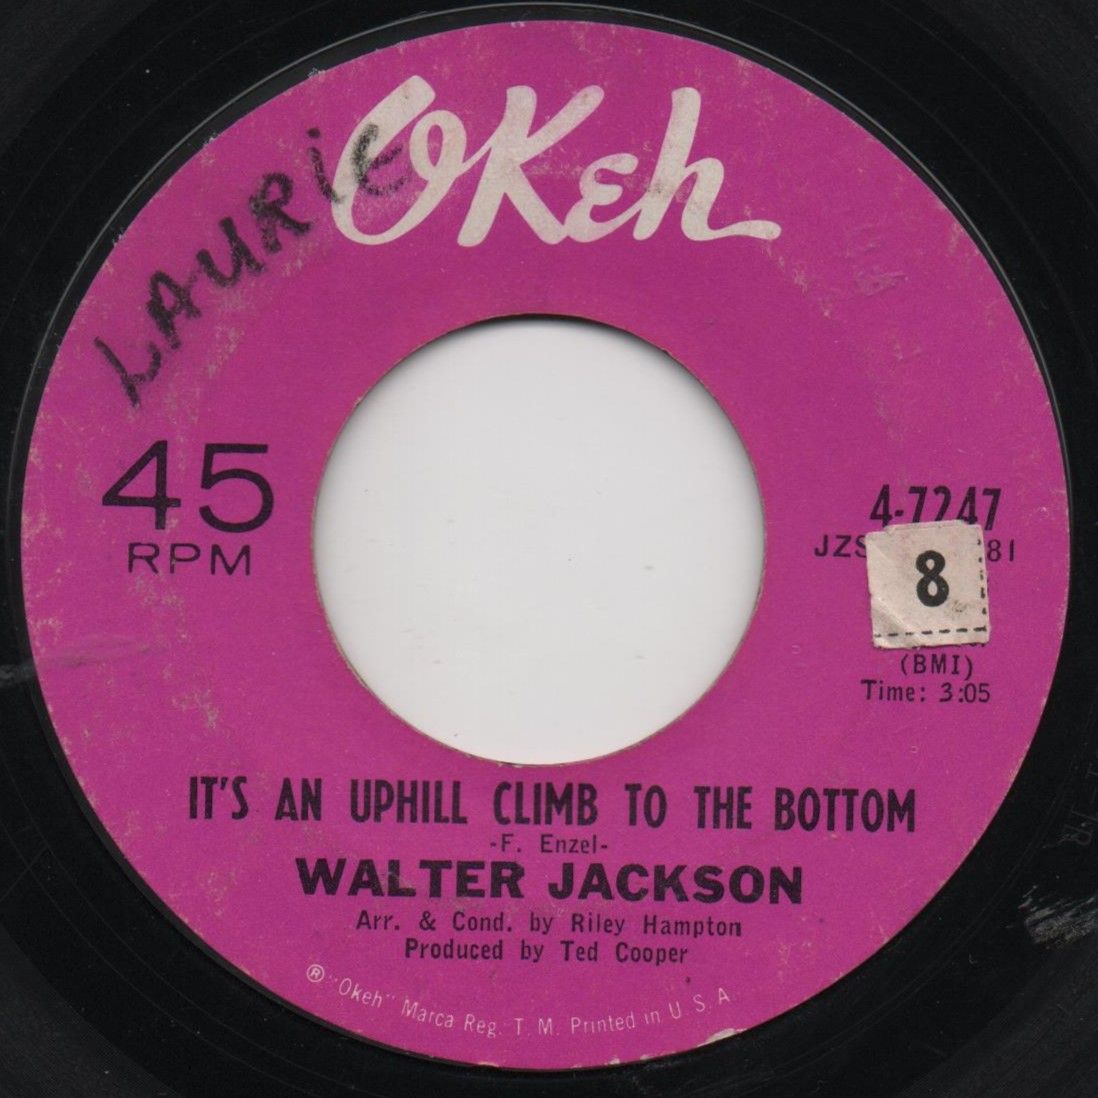 WALTER JACKSON - IT'S AN UPHILL CLIMB TO THE BOTTOM